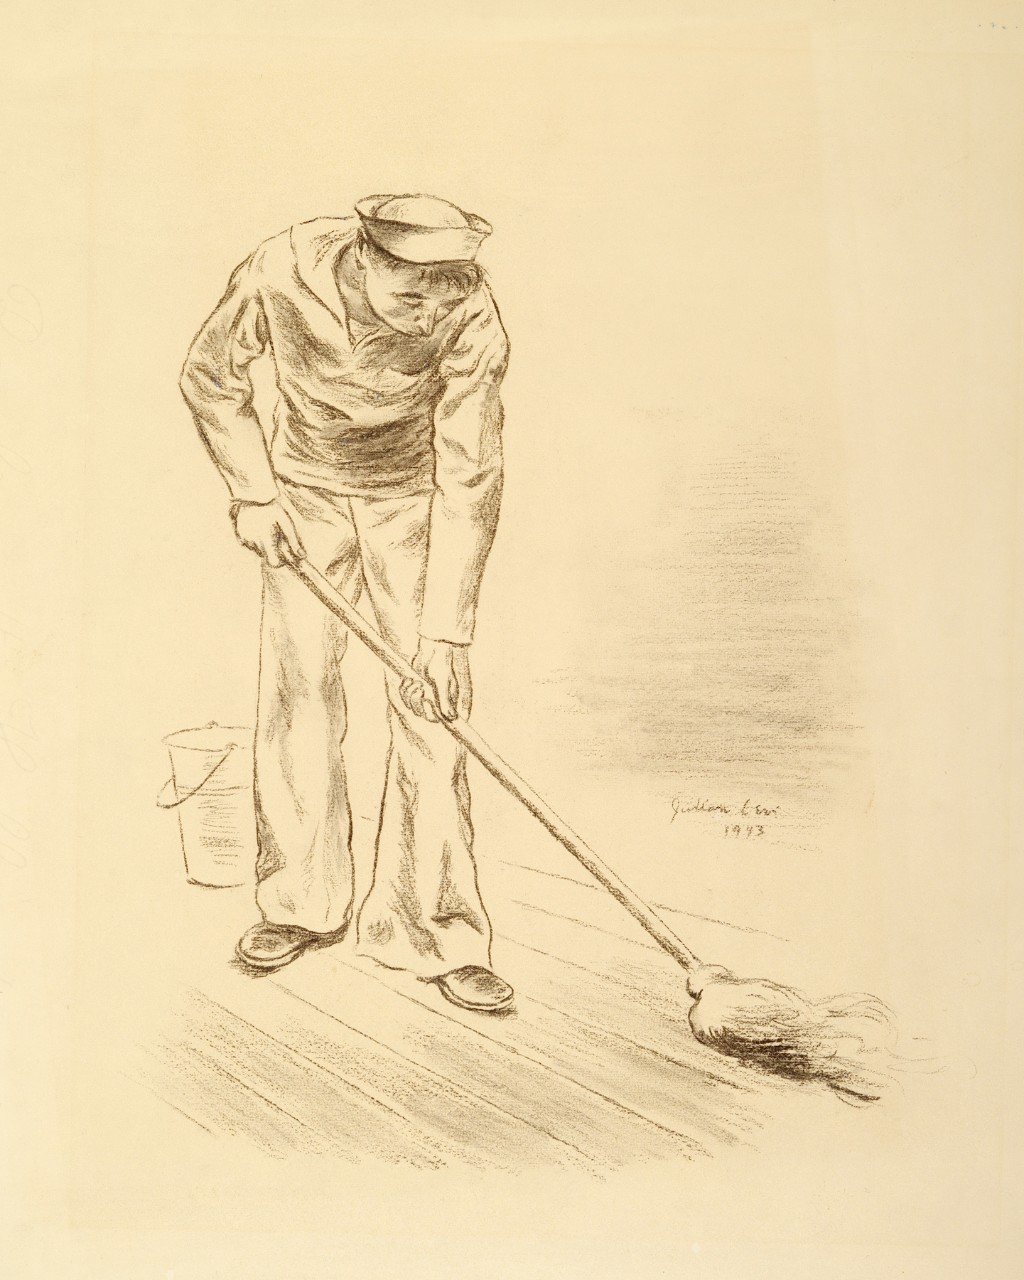 A sailor with a mop